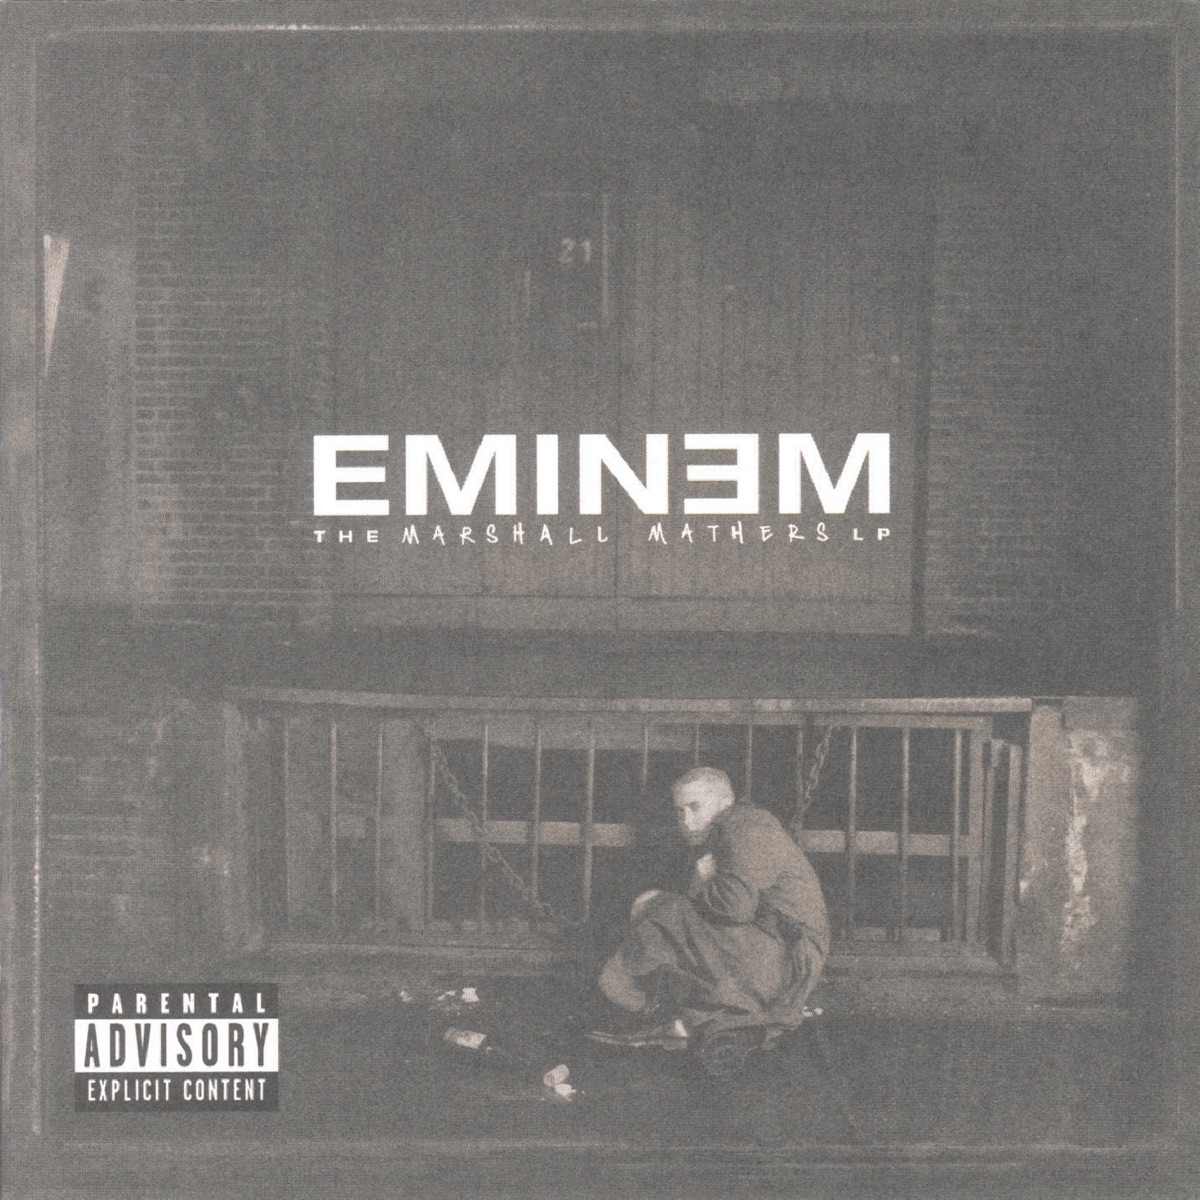 The Slim Shady LP - Album by Eminem - Apple Music